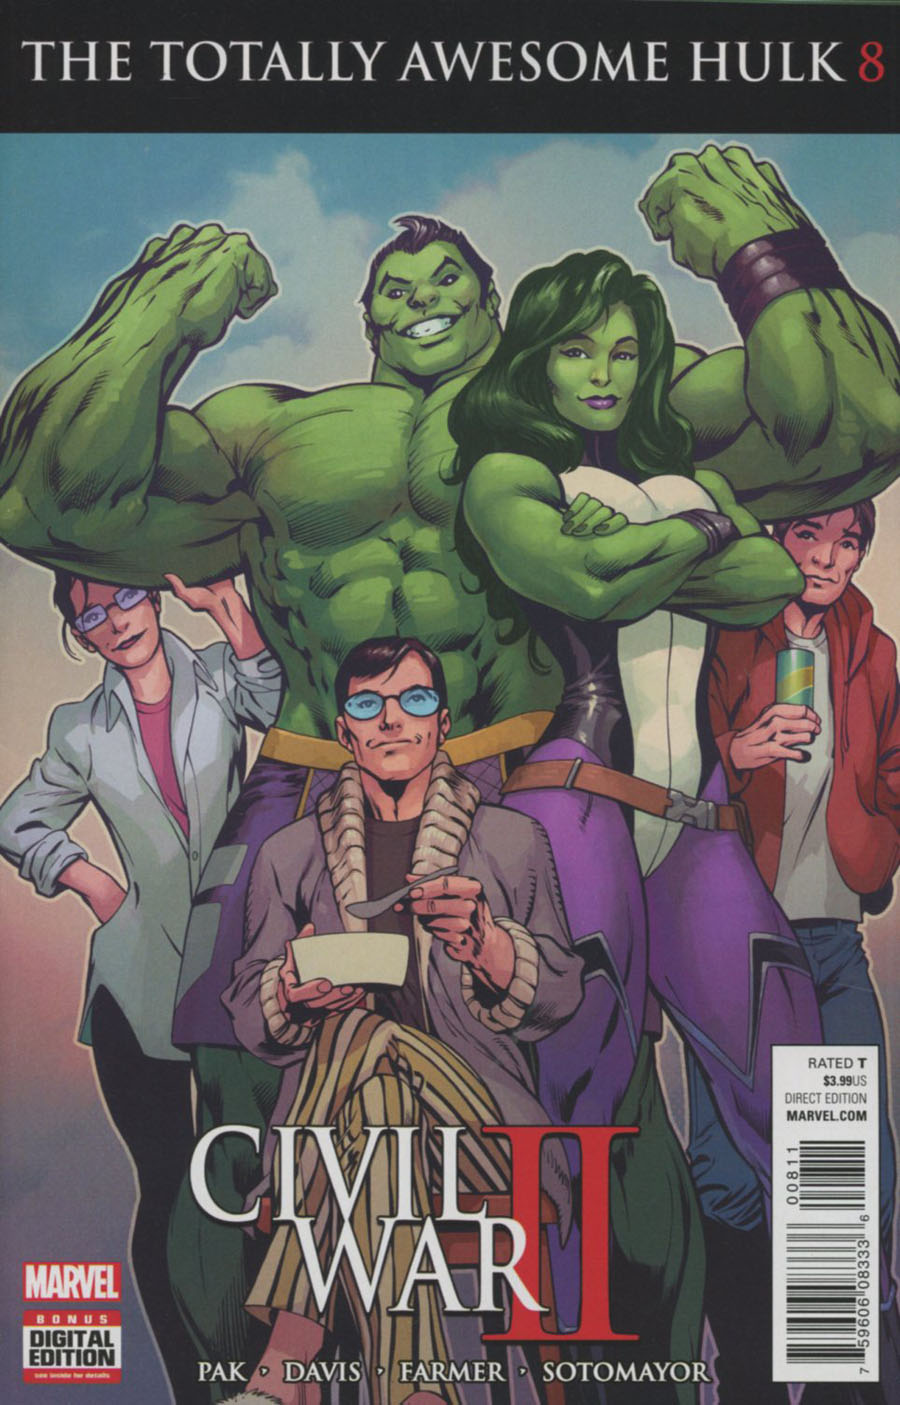 Totally Awesome Hulk #8 (Civil War II Tie-In)